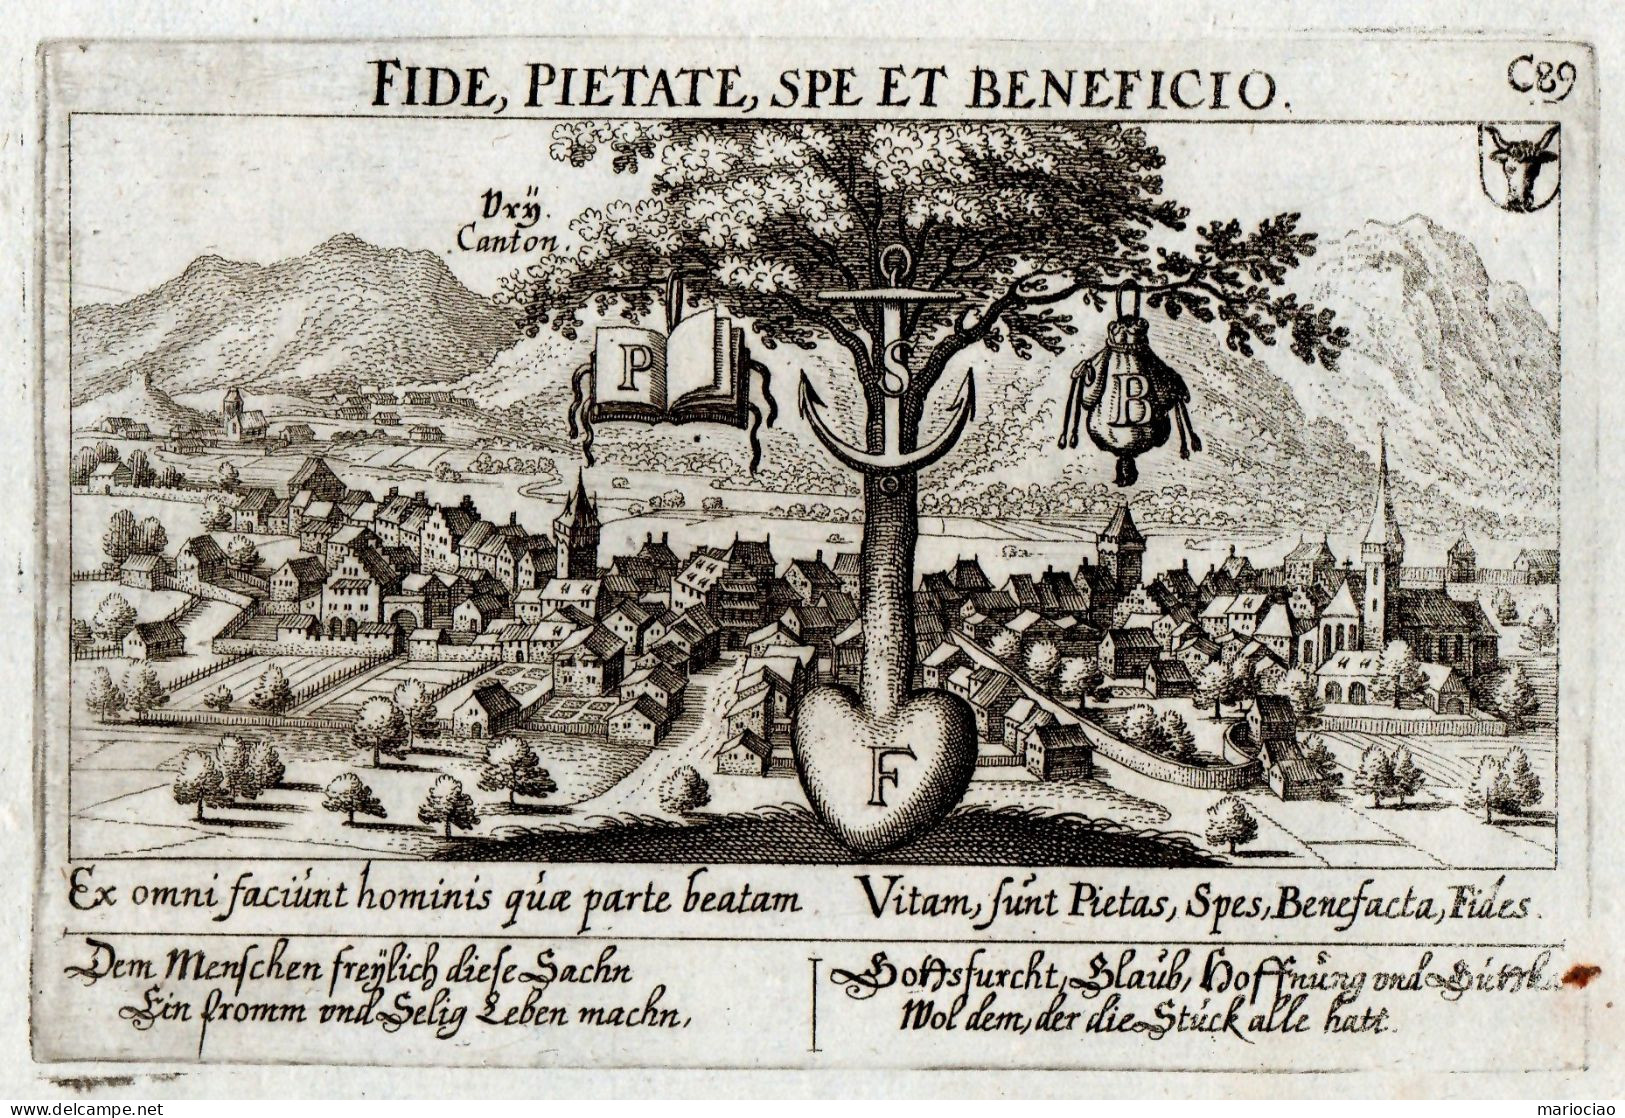 ST-CH ALTDORF Alteref Canton Uri 1678~ Ury Canton Daniel Meisner -FIDE PIETATE SPE ET BENEFICIO - Prints & Engravings